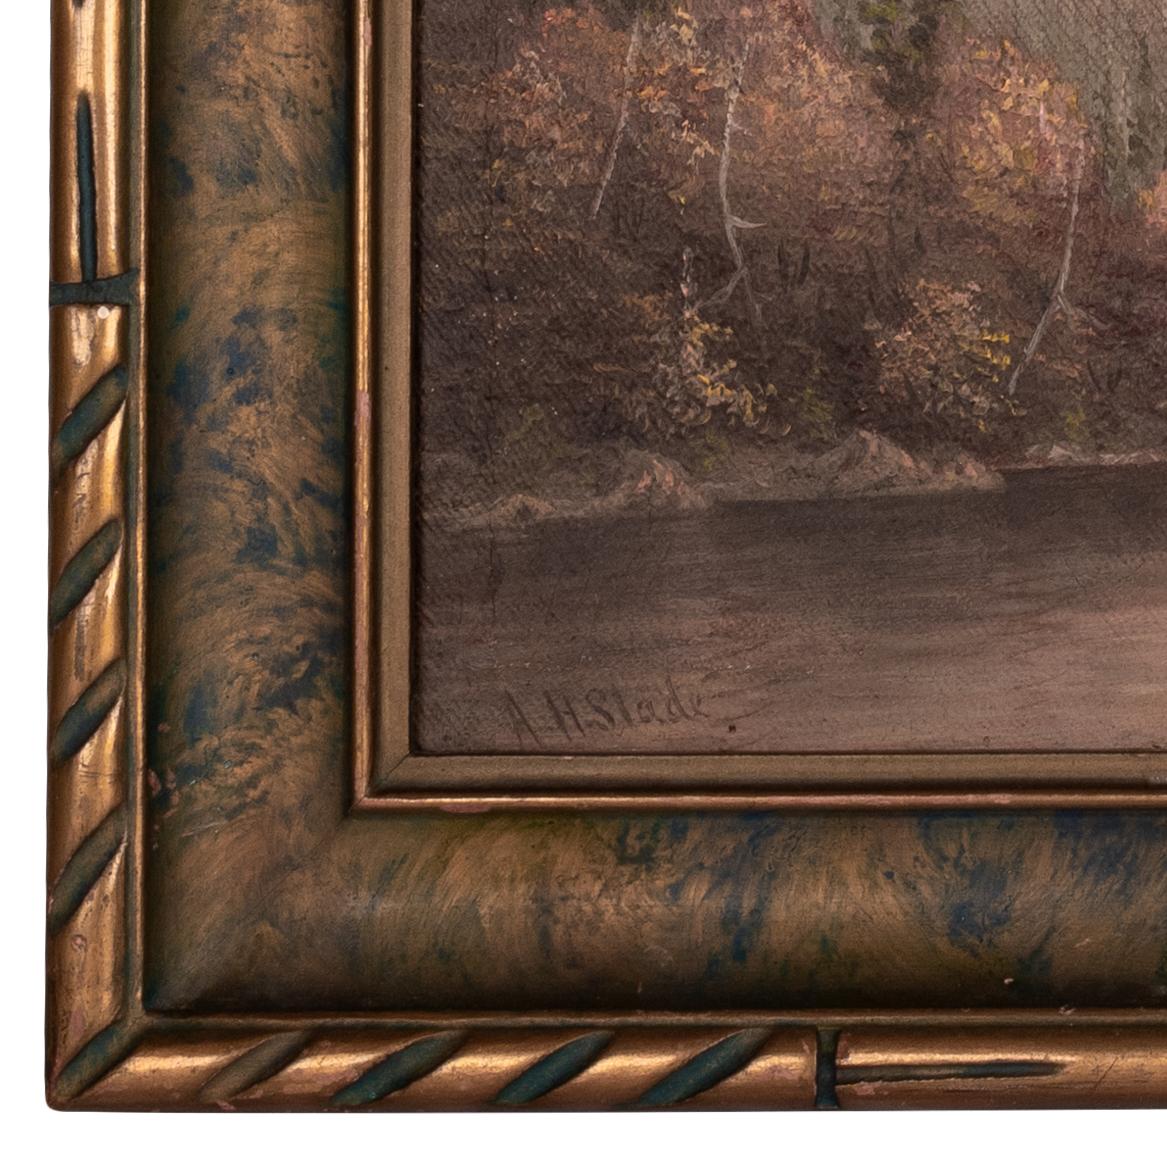 Antique American 19th C Realist California River Landscape Oil on Canvas 1888 For Sale 6